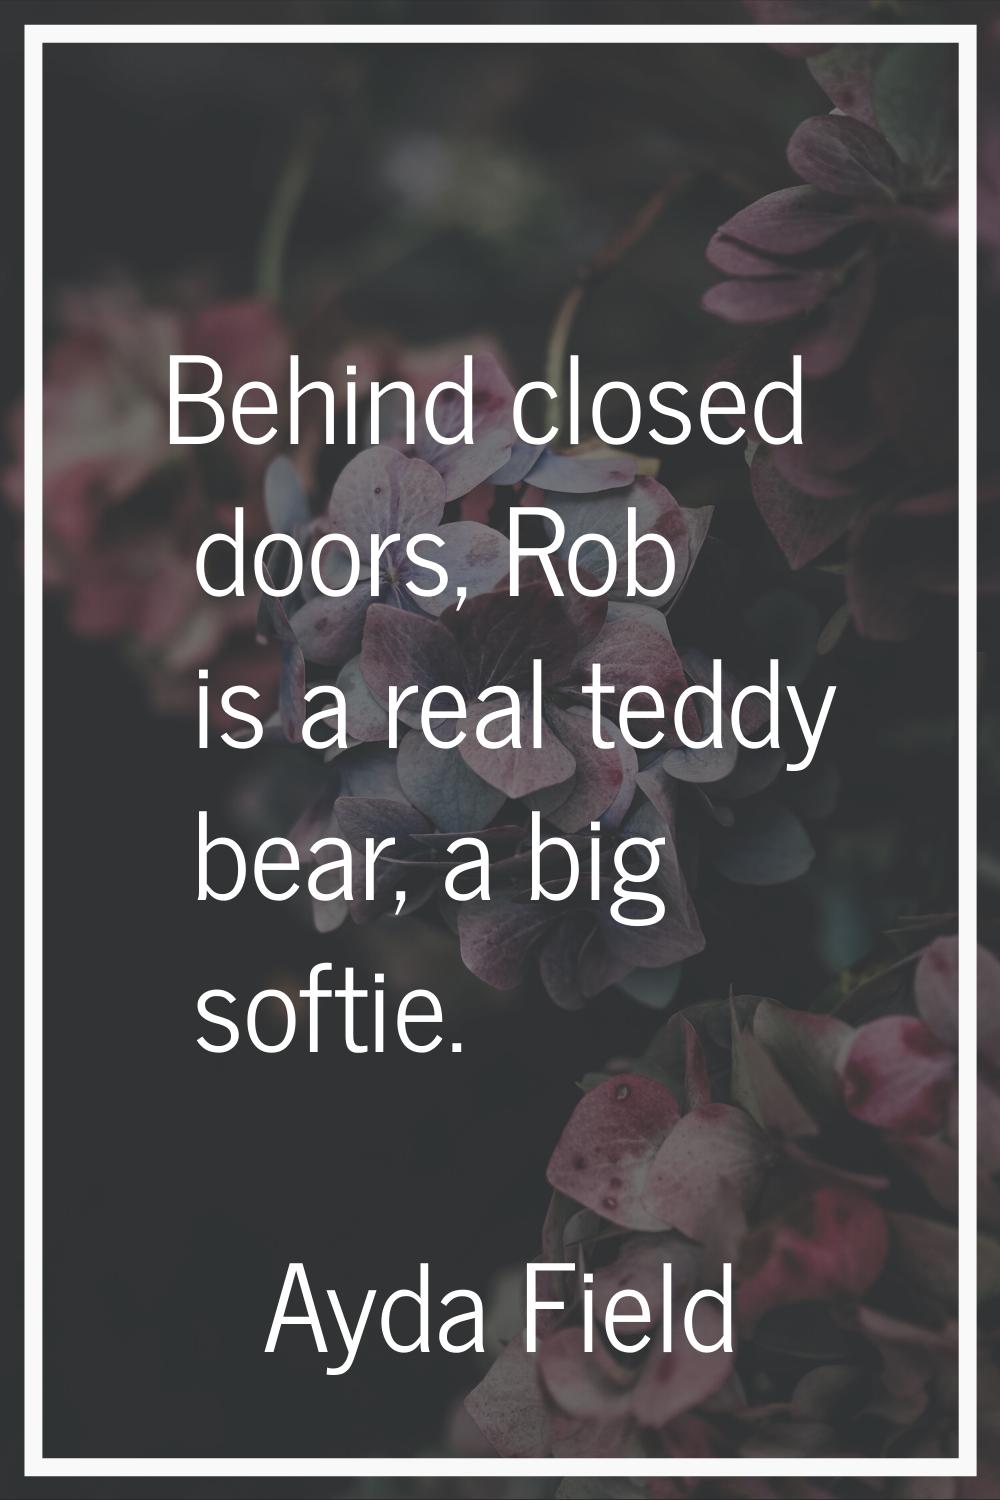 Behind closed doors, Rob is a real teddy bear, a big softie.